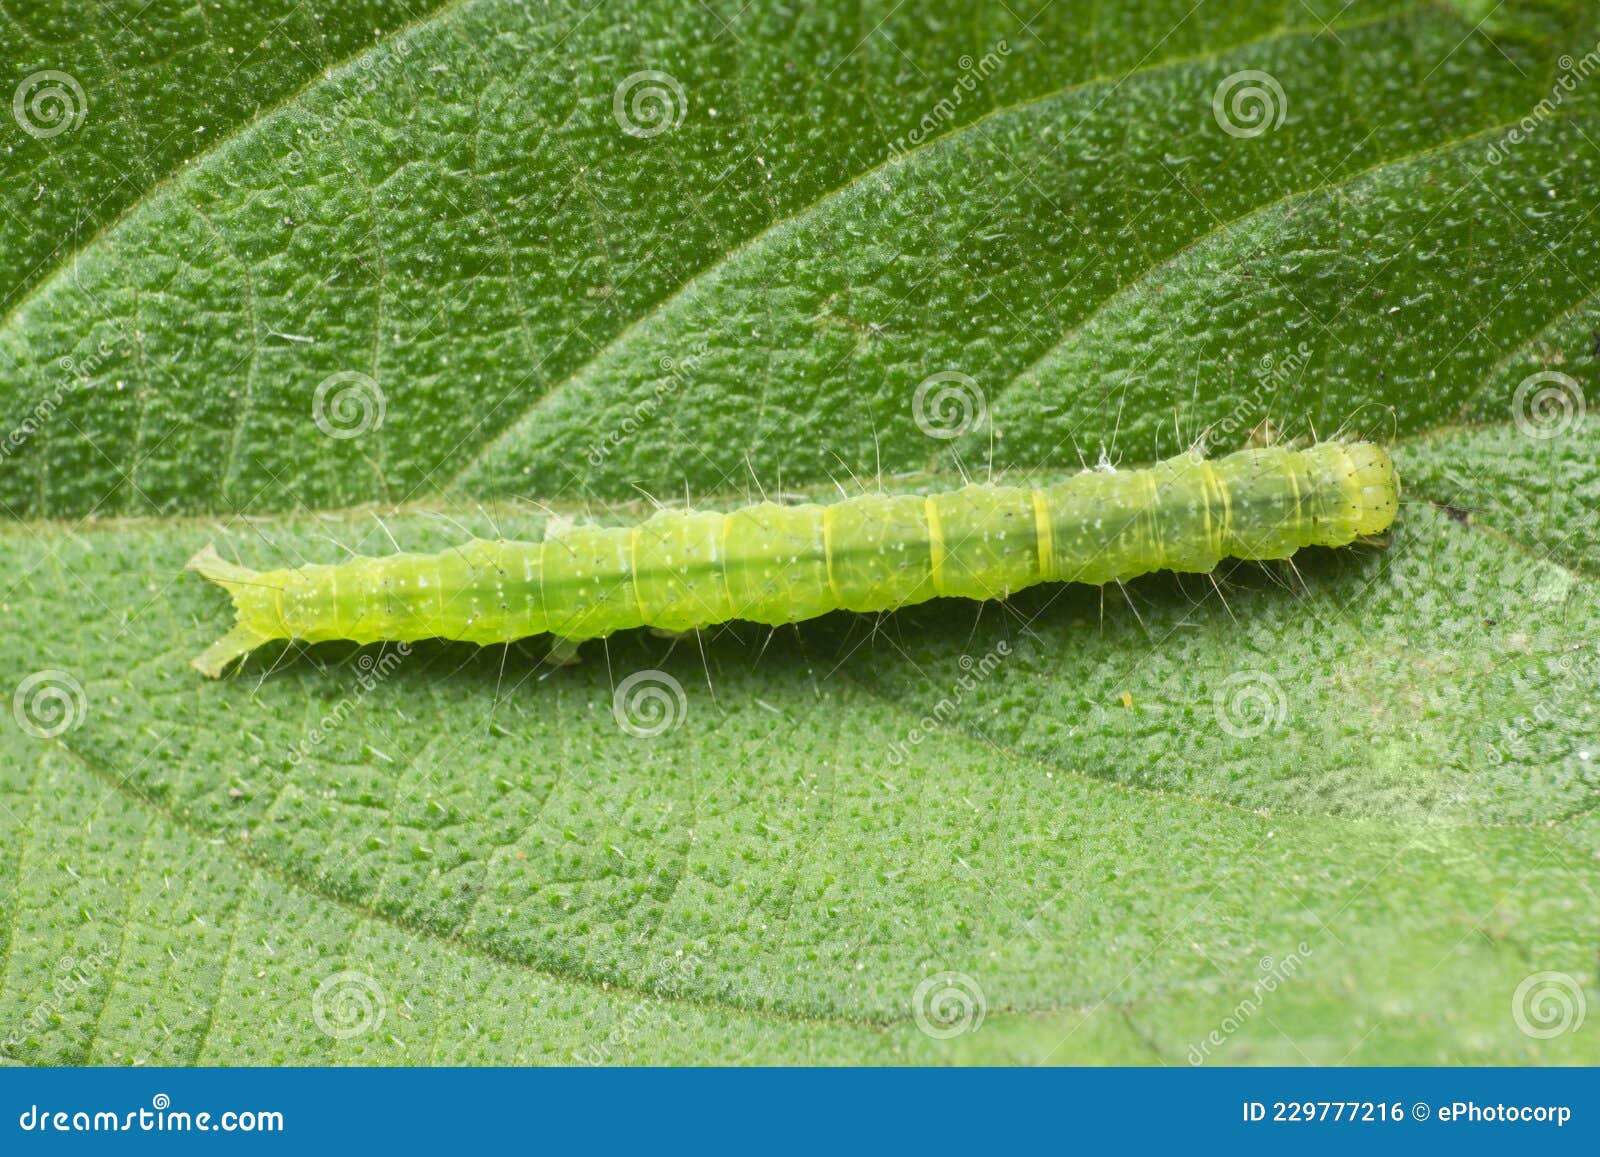 cabbage looper moth caterpillar.family noctuidae, referred to as owlet moths, trichoplusia ni, satara